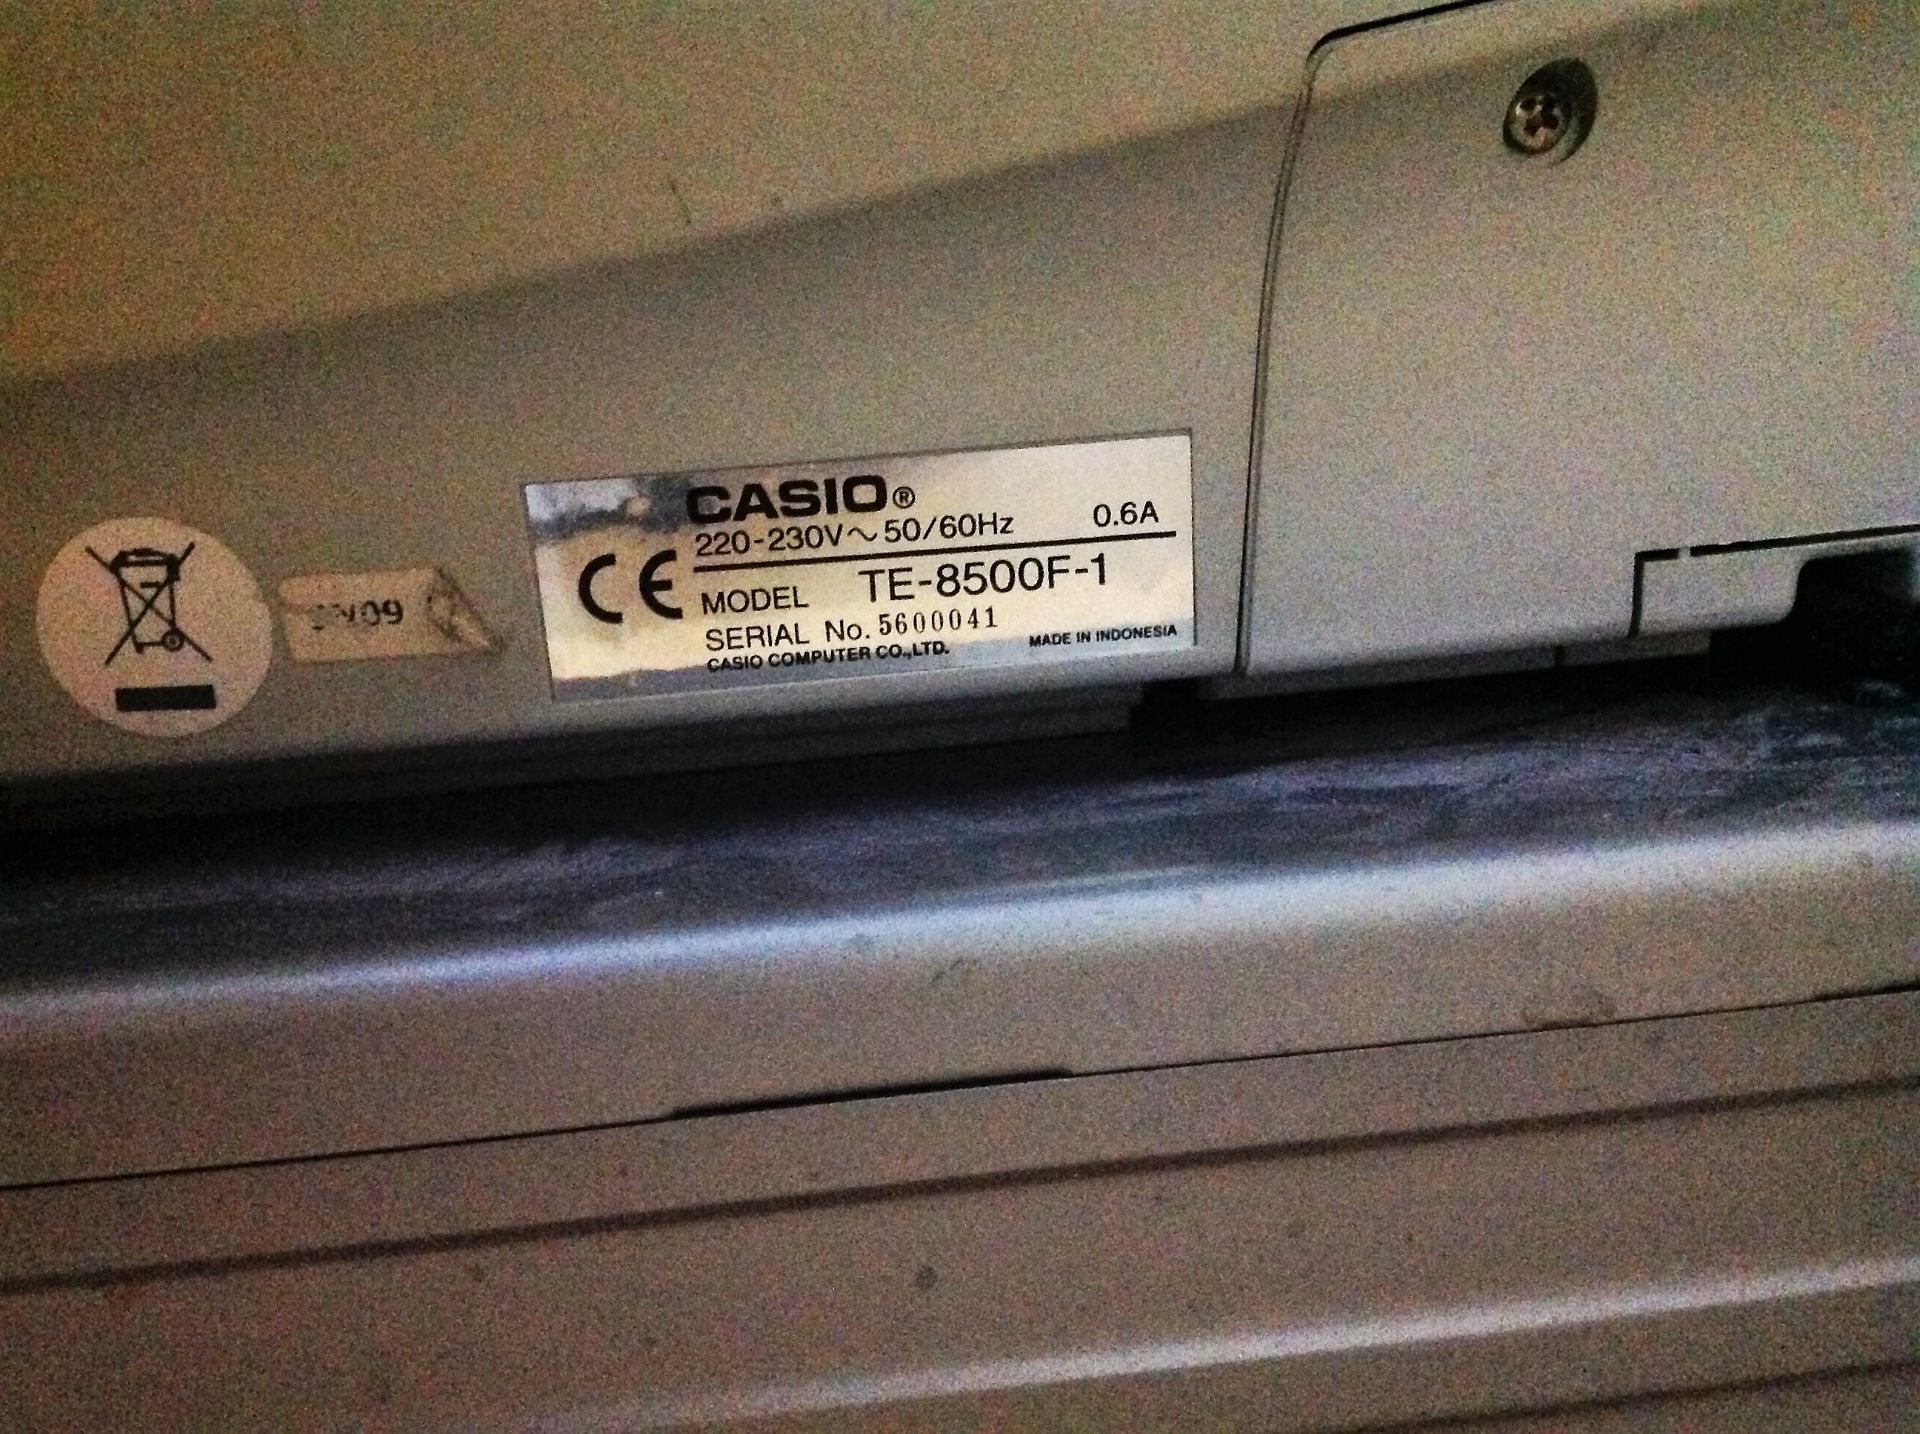 Casio Electronic Cash Register - Model: TE-8500F - Image 4 of 6